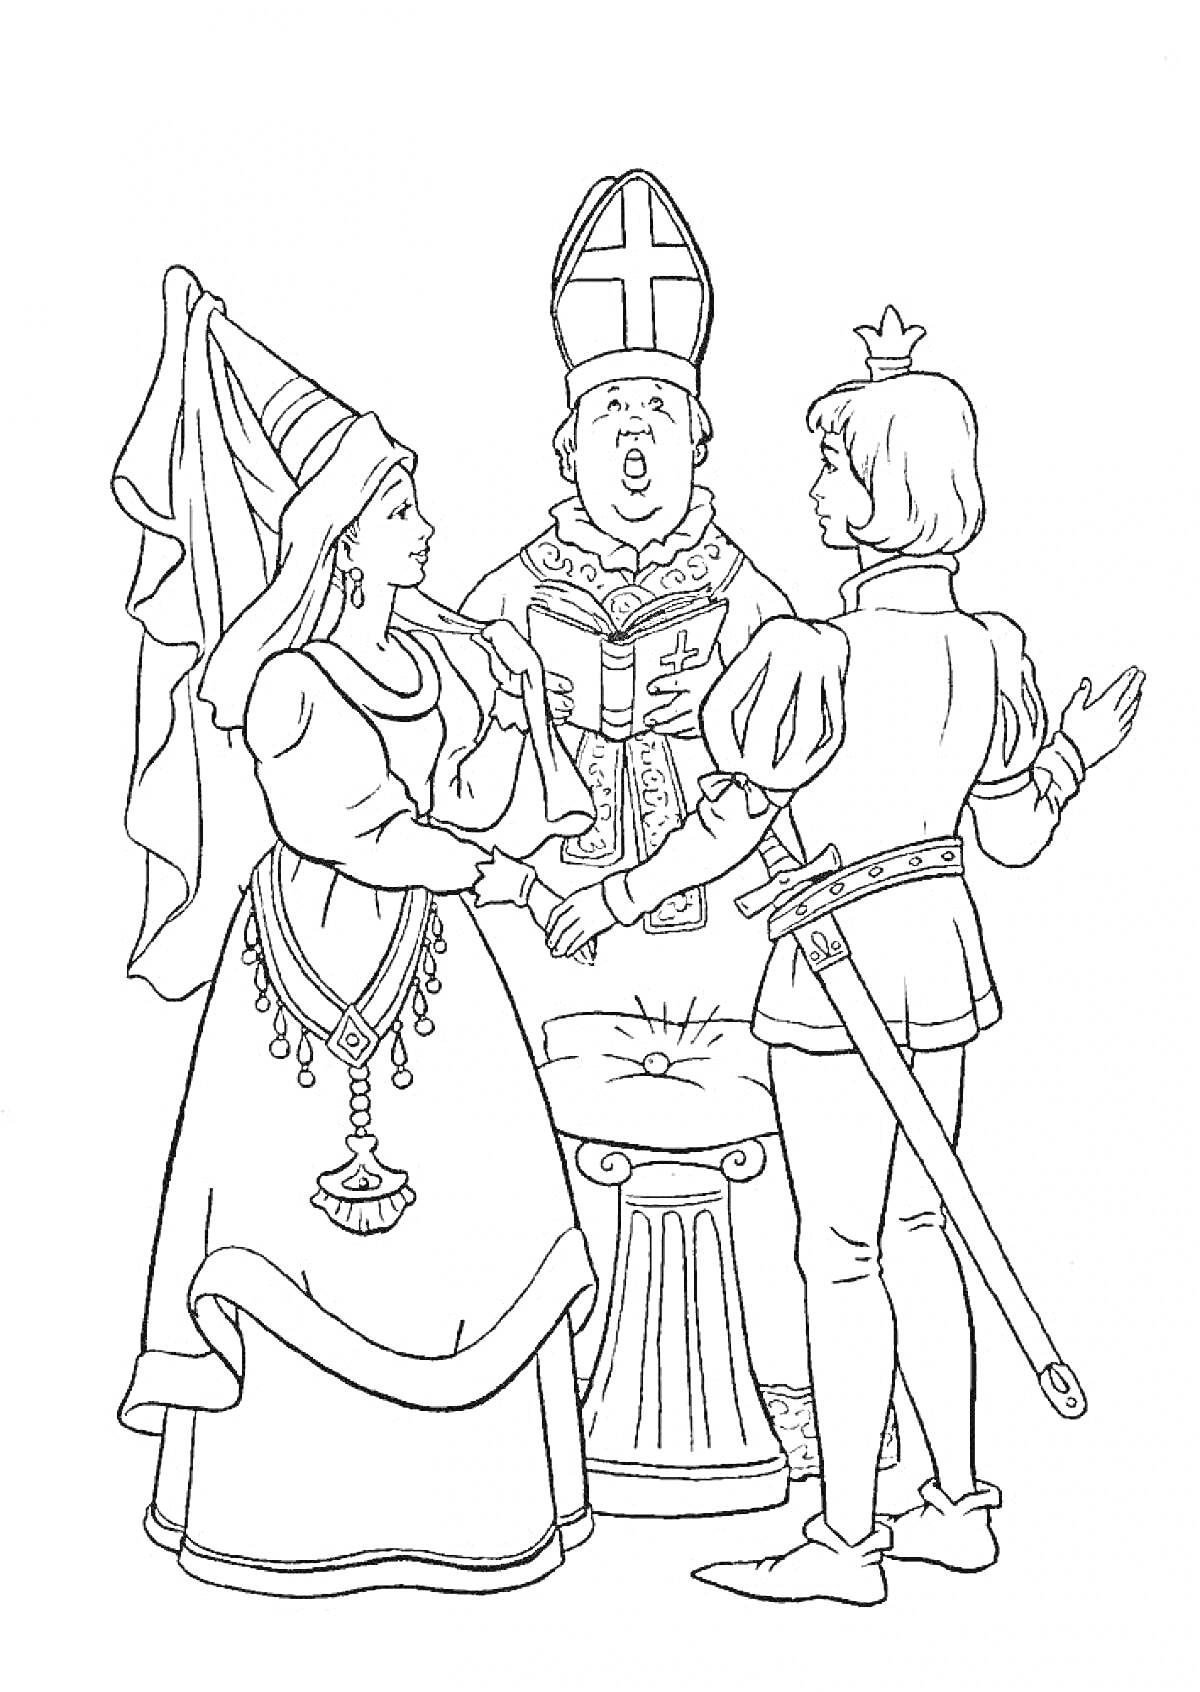 Раскраска Принц и принцесса перед святым отцом на церемонии бракосочетания.